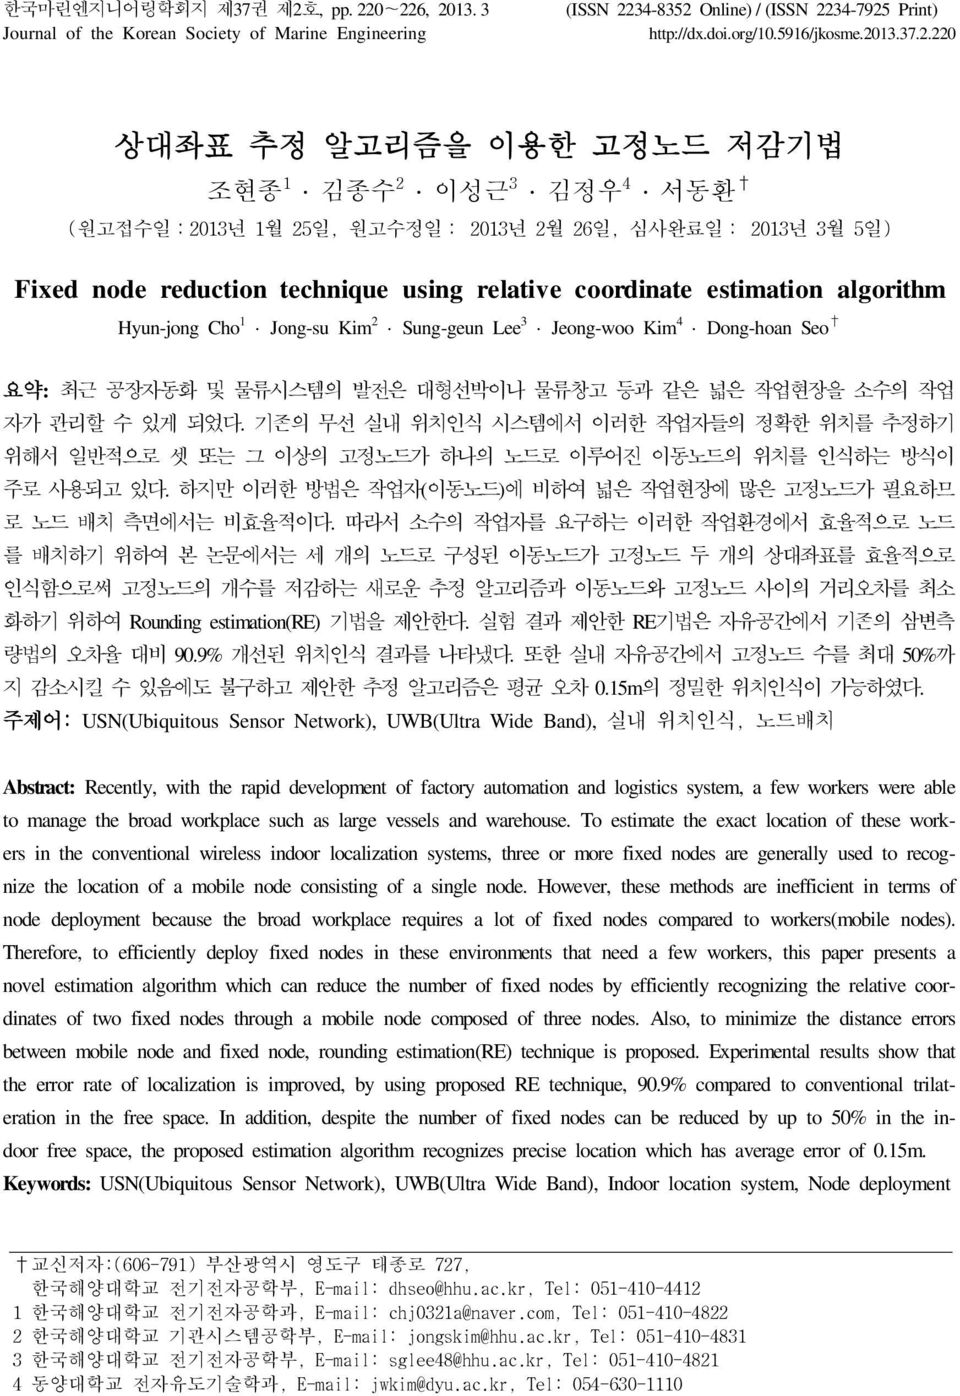 0 226, 2013. 3 Journal of the Korean Society of Marine Engineering (ISSN 2234-8352 Online) / (ISSN 2234-7925 Print) http://dx.doi.org/10.5916/jkosme.2013.37.2.220 상대좌표 추정 알고리즘을 이용한 고정노드 저감기법 조현종 1